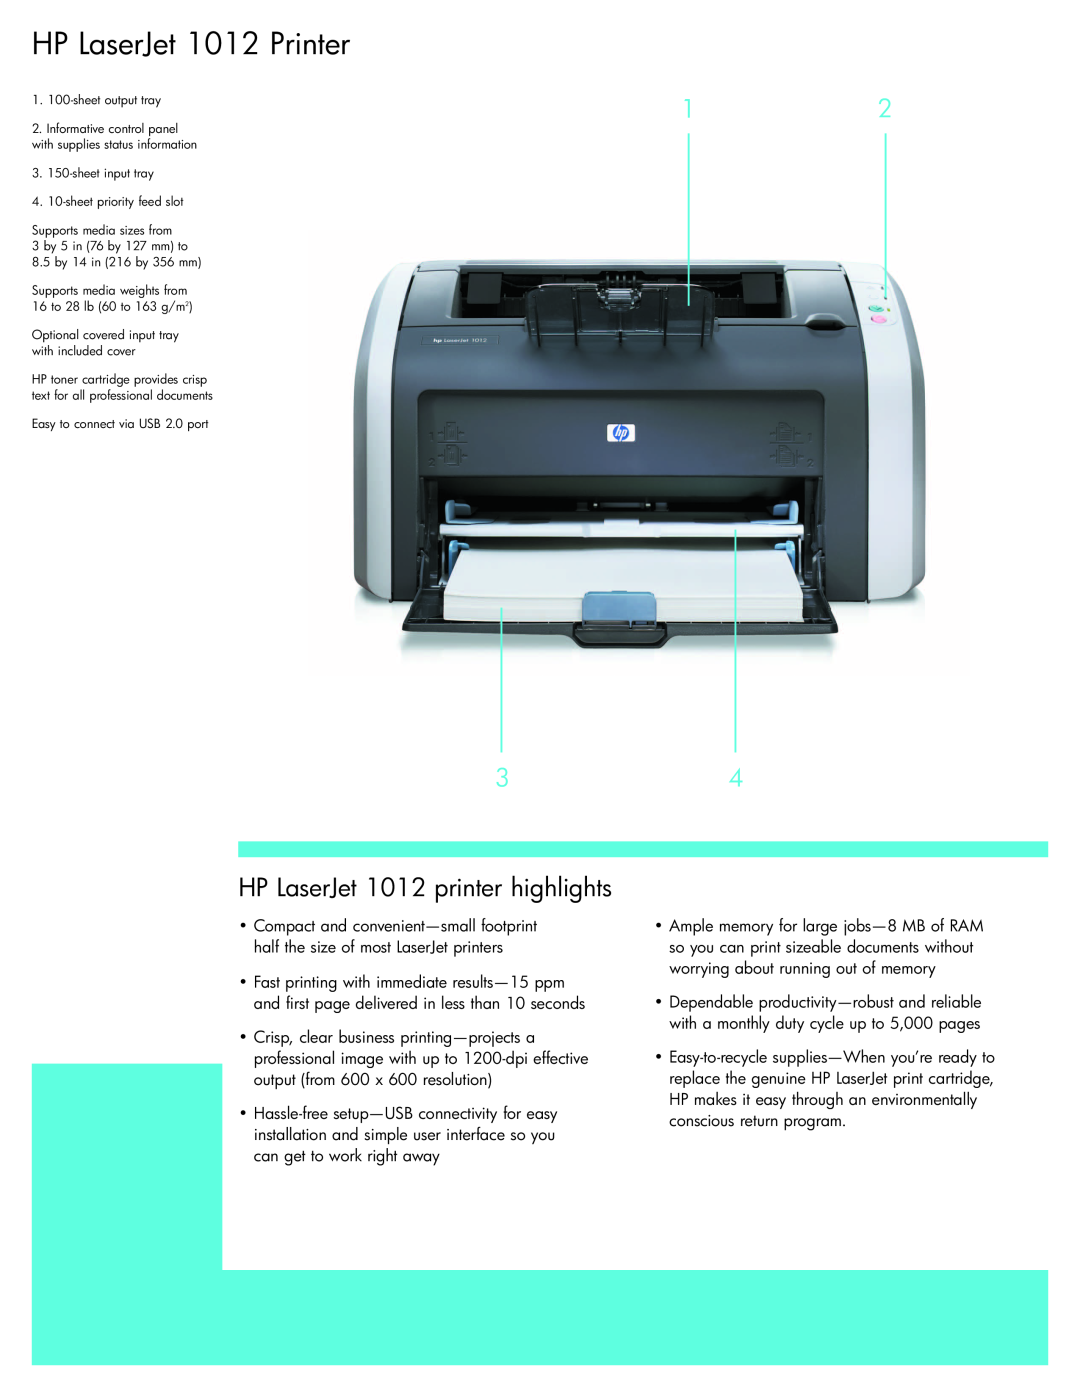 Sharp warranty HP LaserJet 1012 Printer, HP LaserJet 1012 printer highlights 